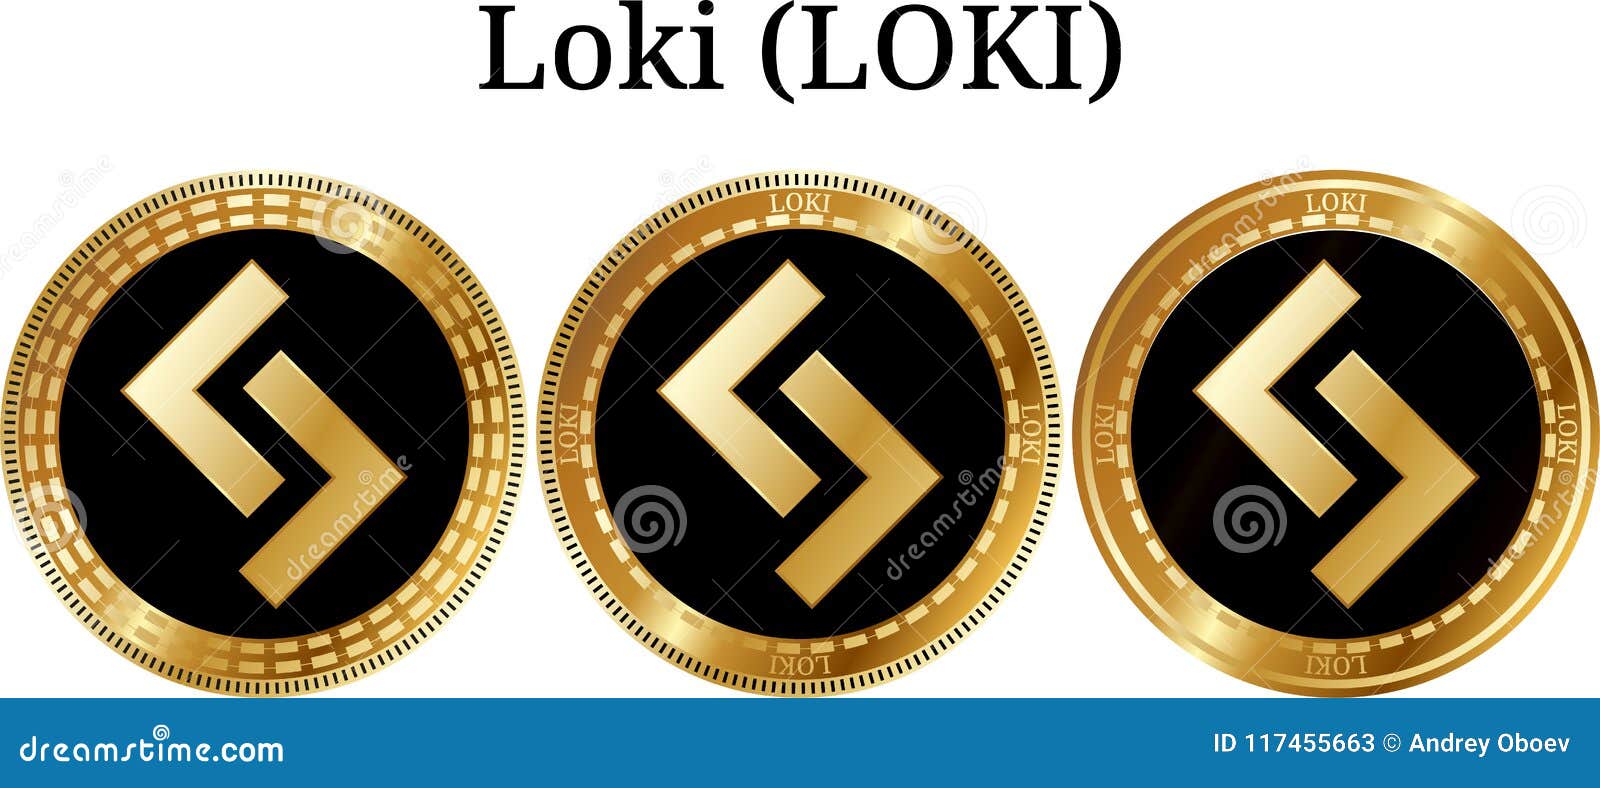 loki coin crypto